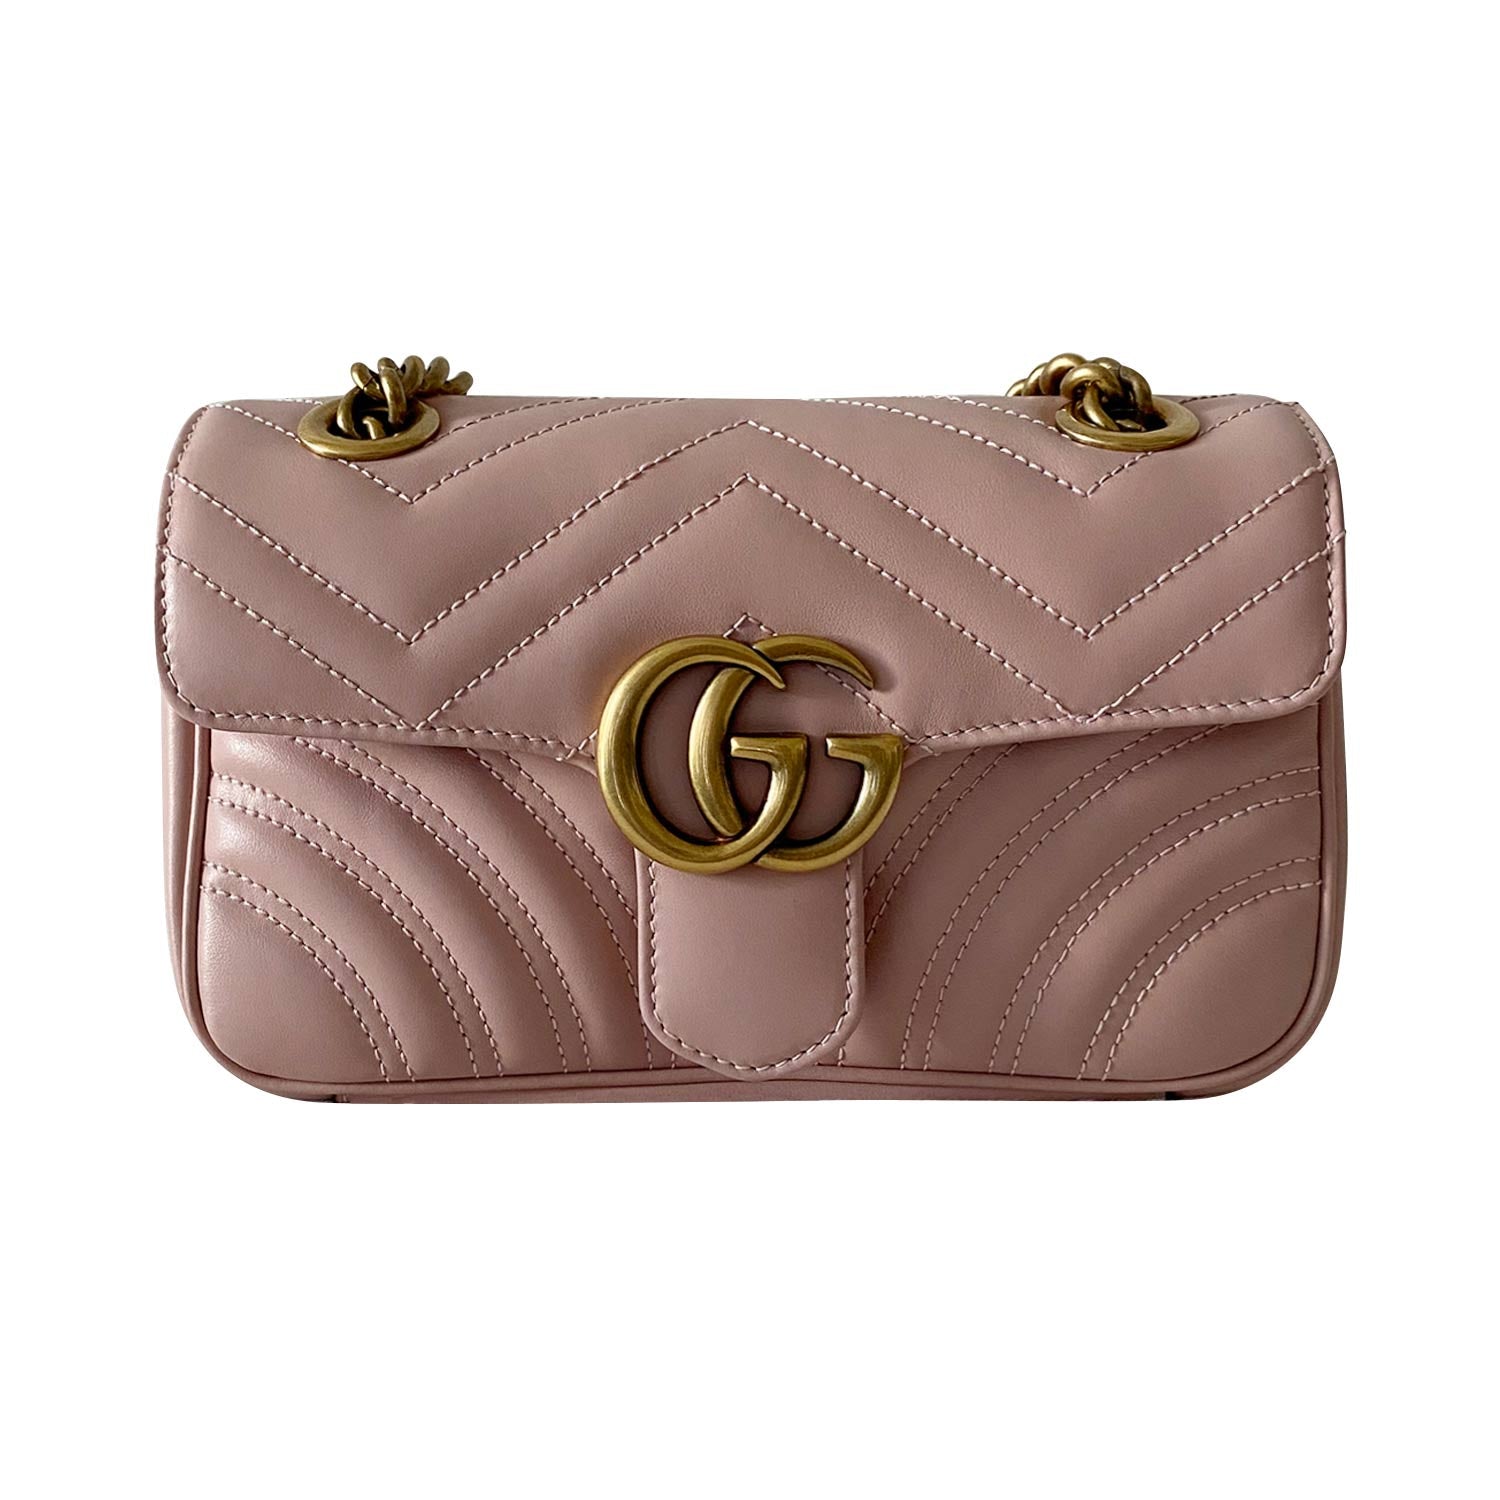 maksimum Watt frakobling Shop authentic Gucci GG Marmont Matelassé Mini Bag at revogue for just USD  1,700.00